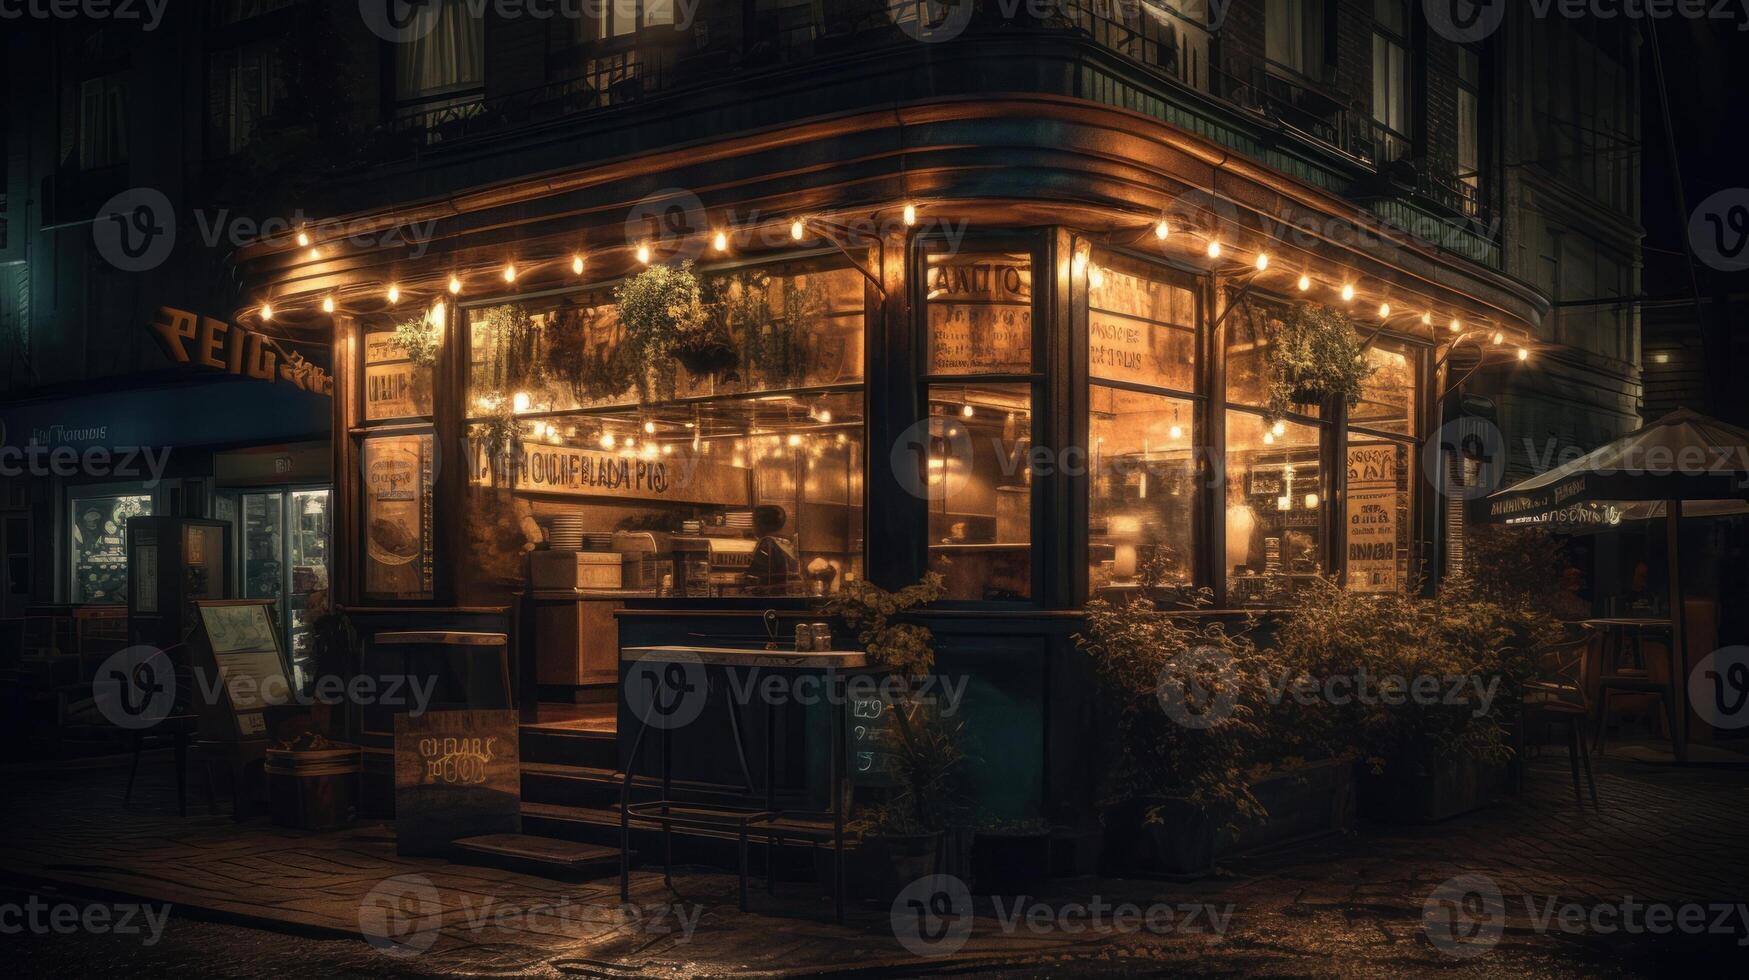 A beautiful glowing coffee shop image photo